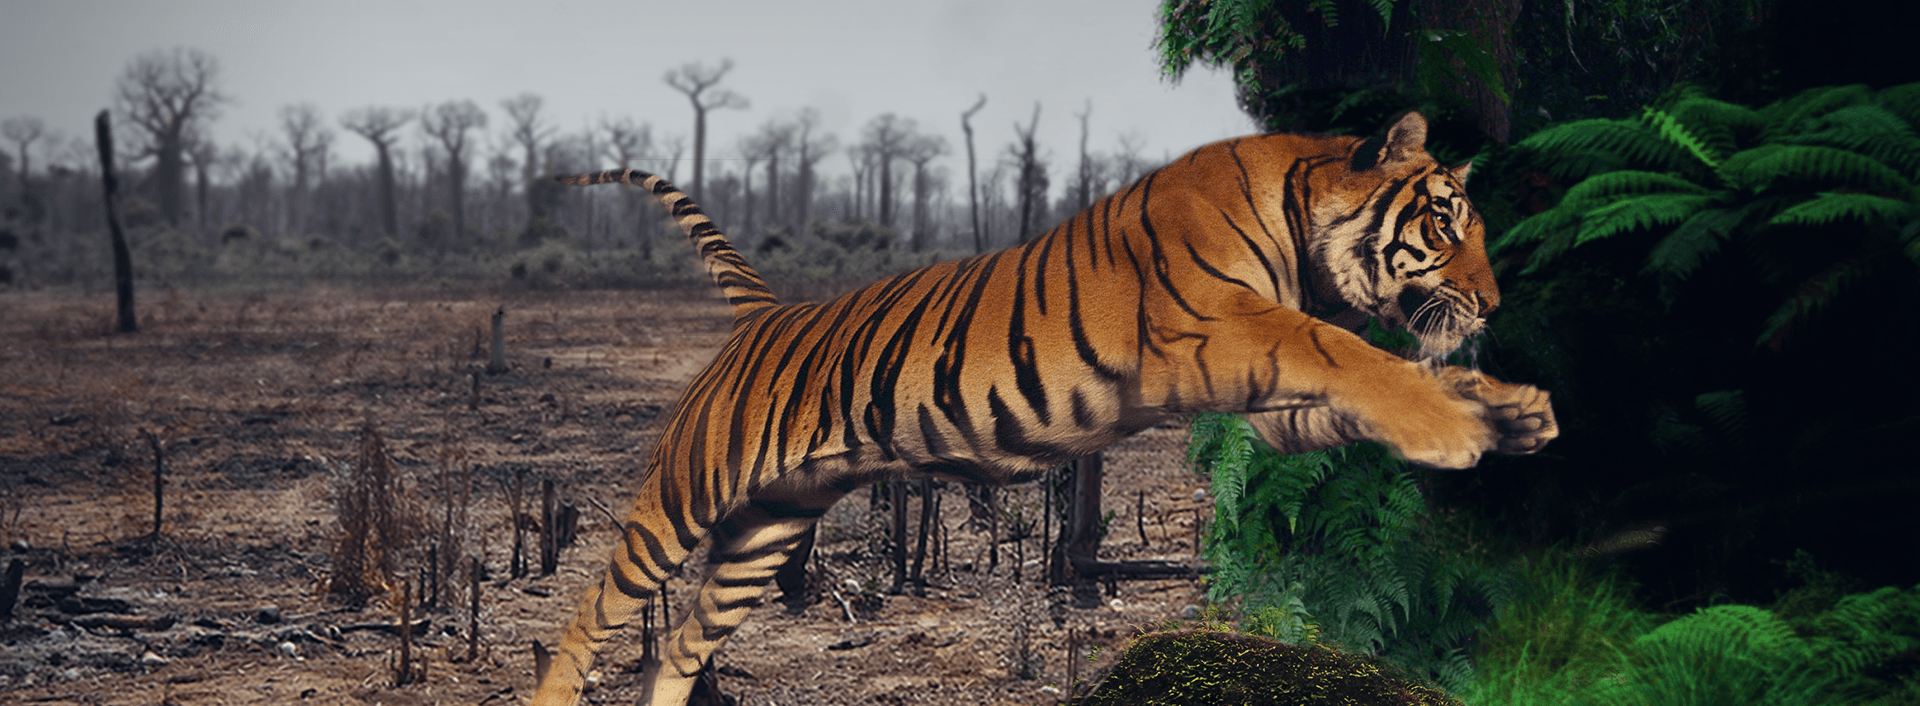 WWF tigre tijger